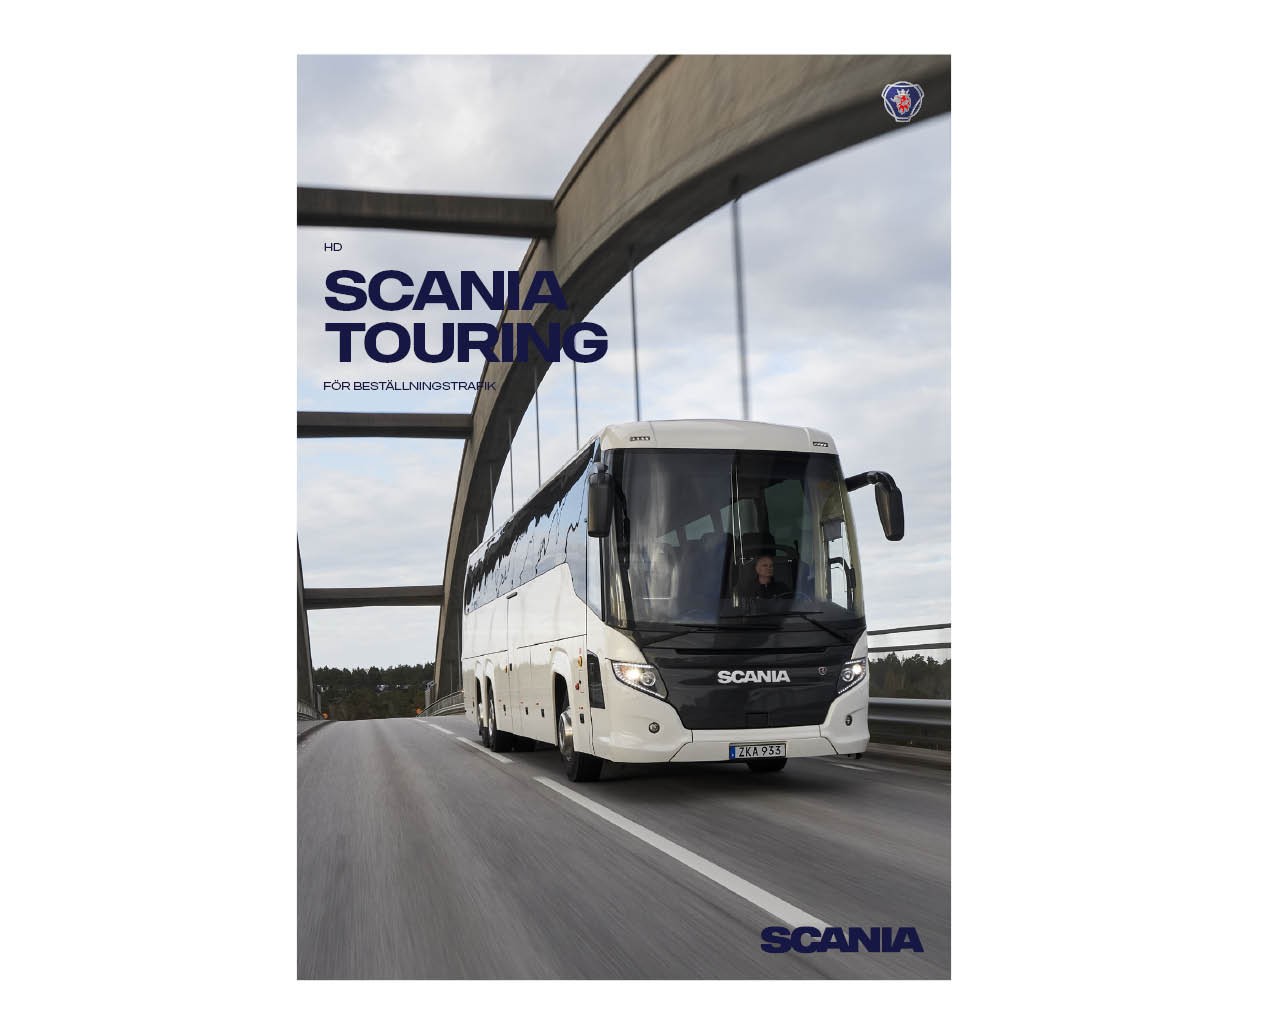 Scania Touring hd